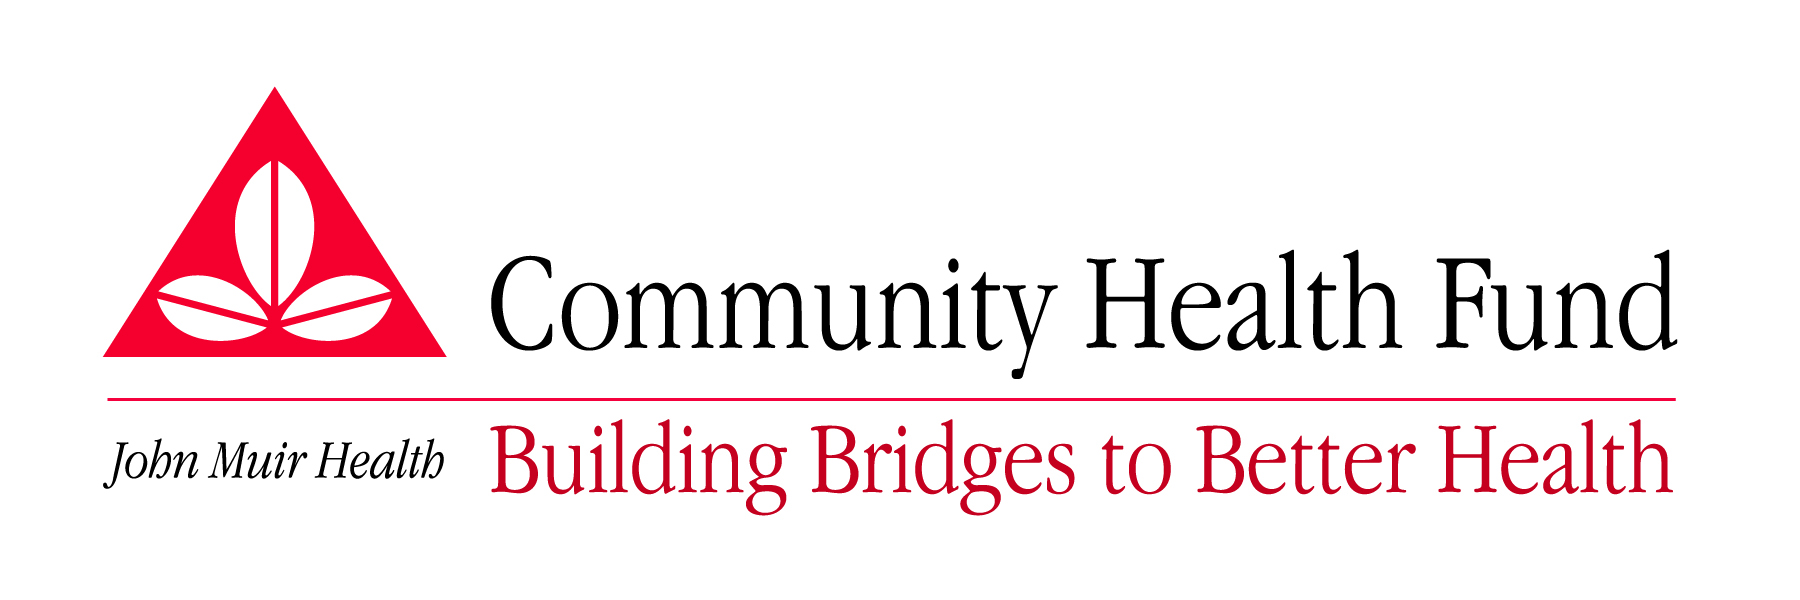 community health fund